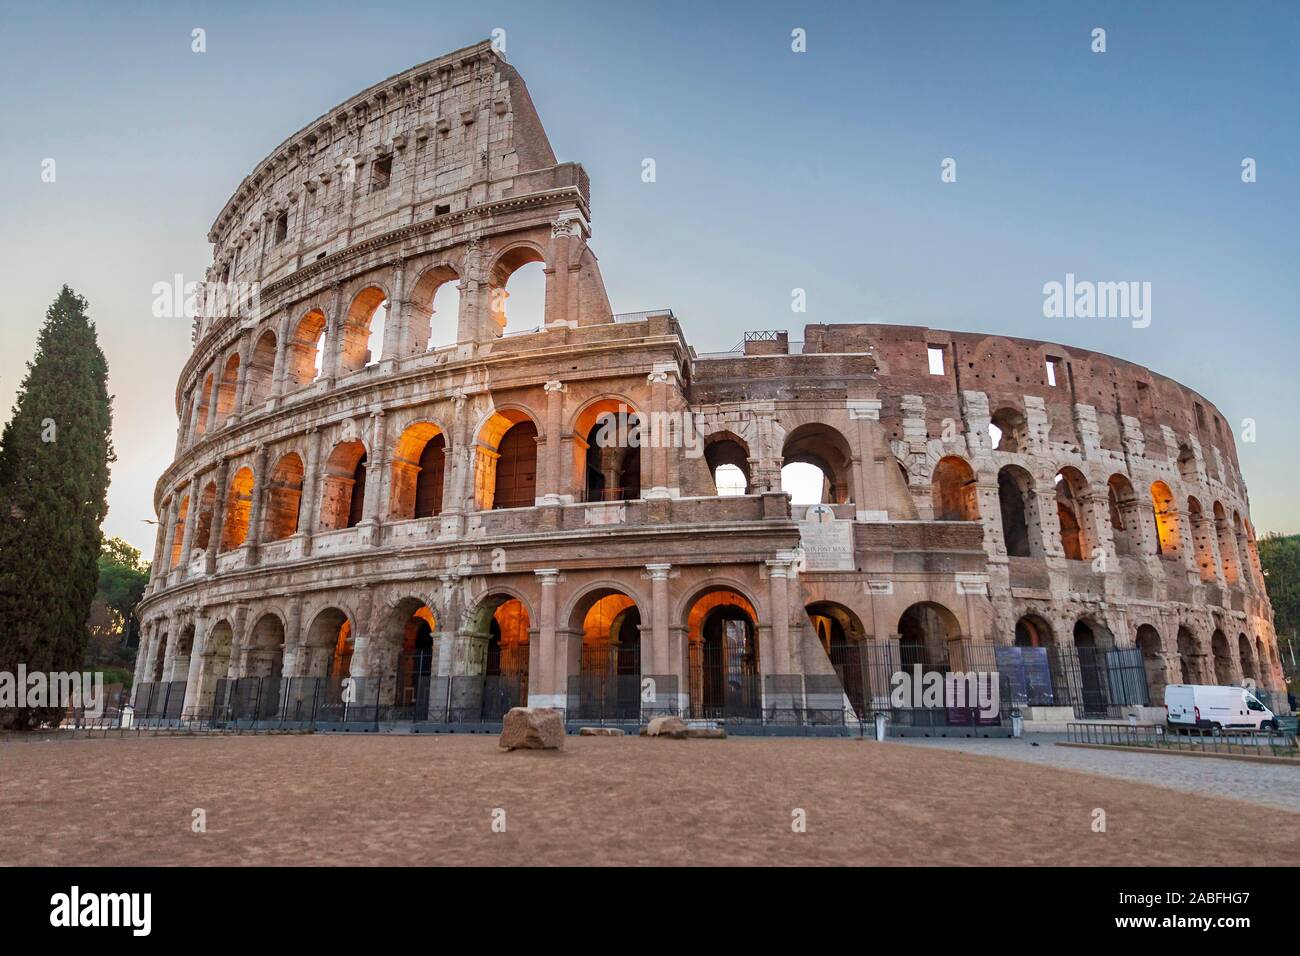 Roman Colosseum, Rome, Italy Stock Photo